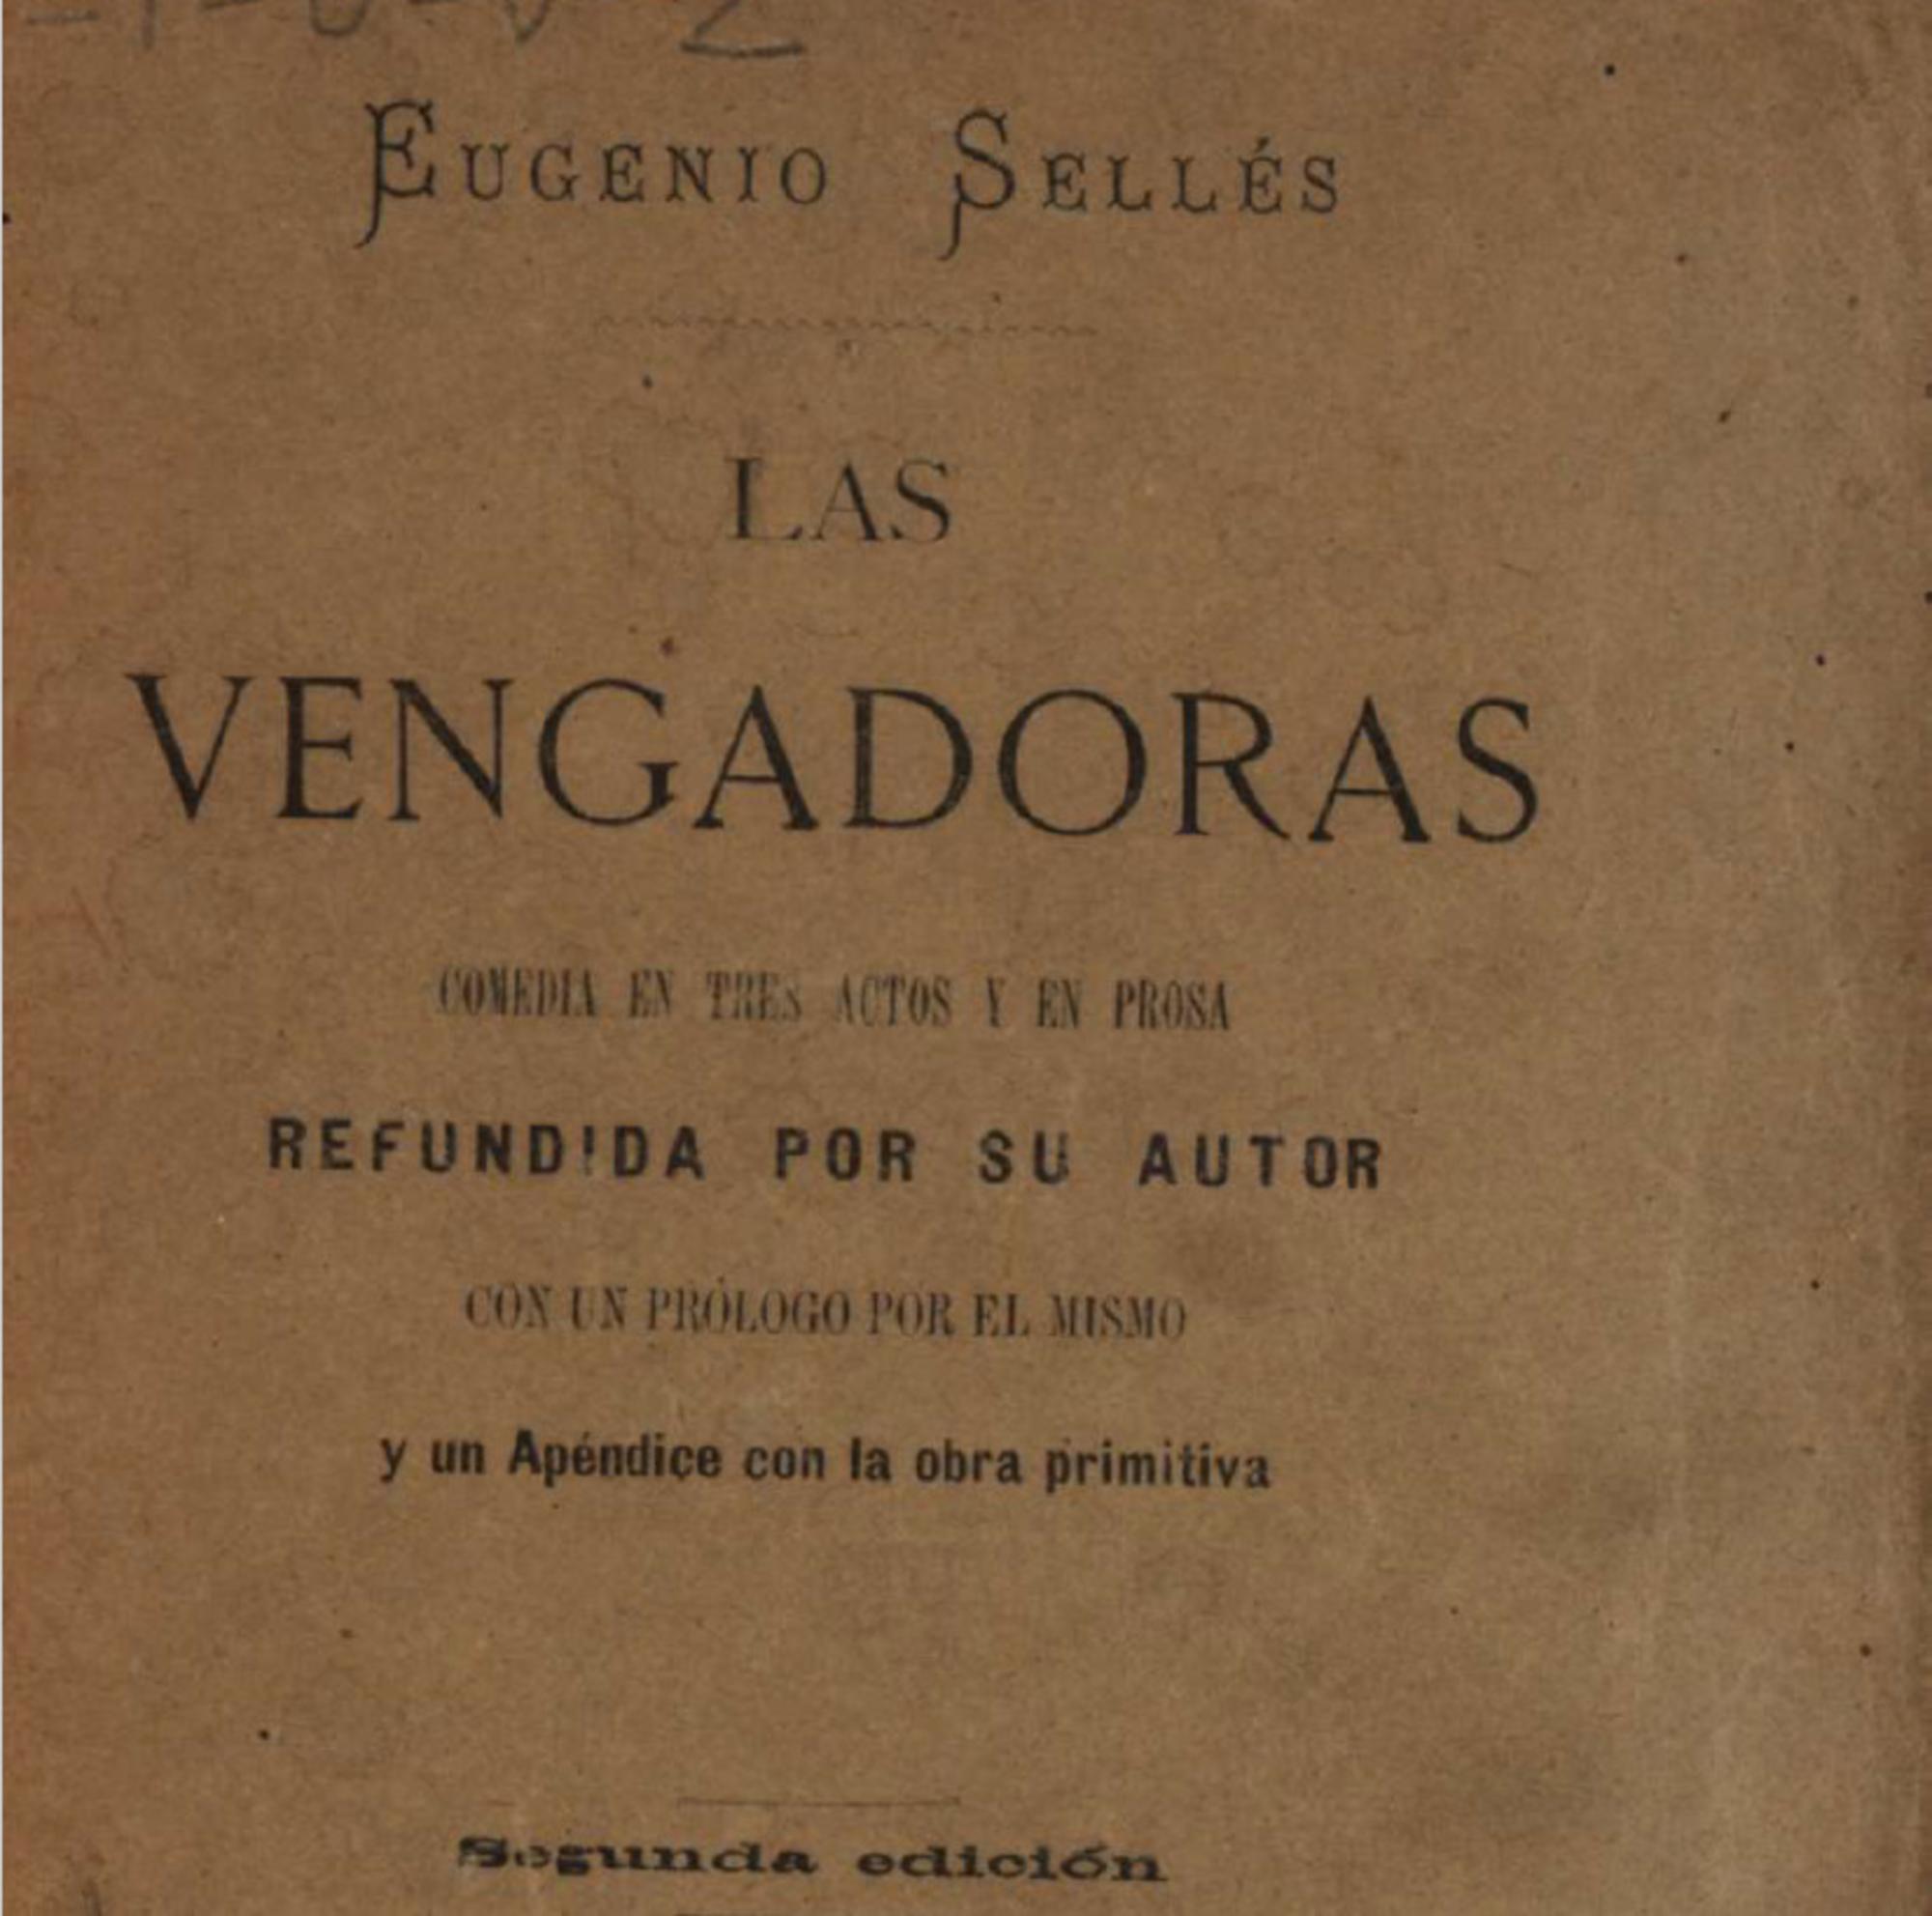 Las vengadoras, obra de Eugenio Sellés